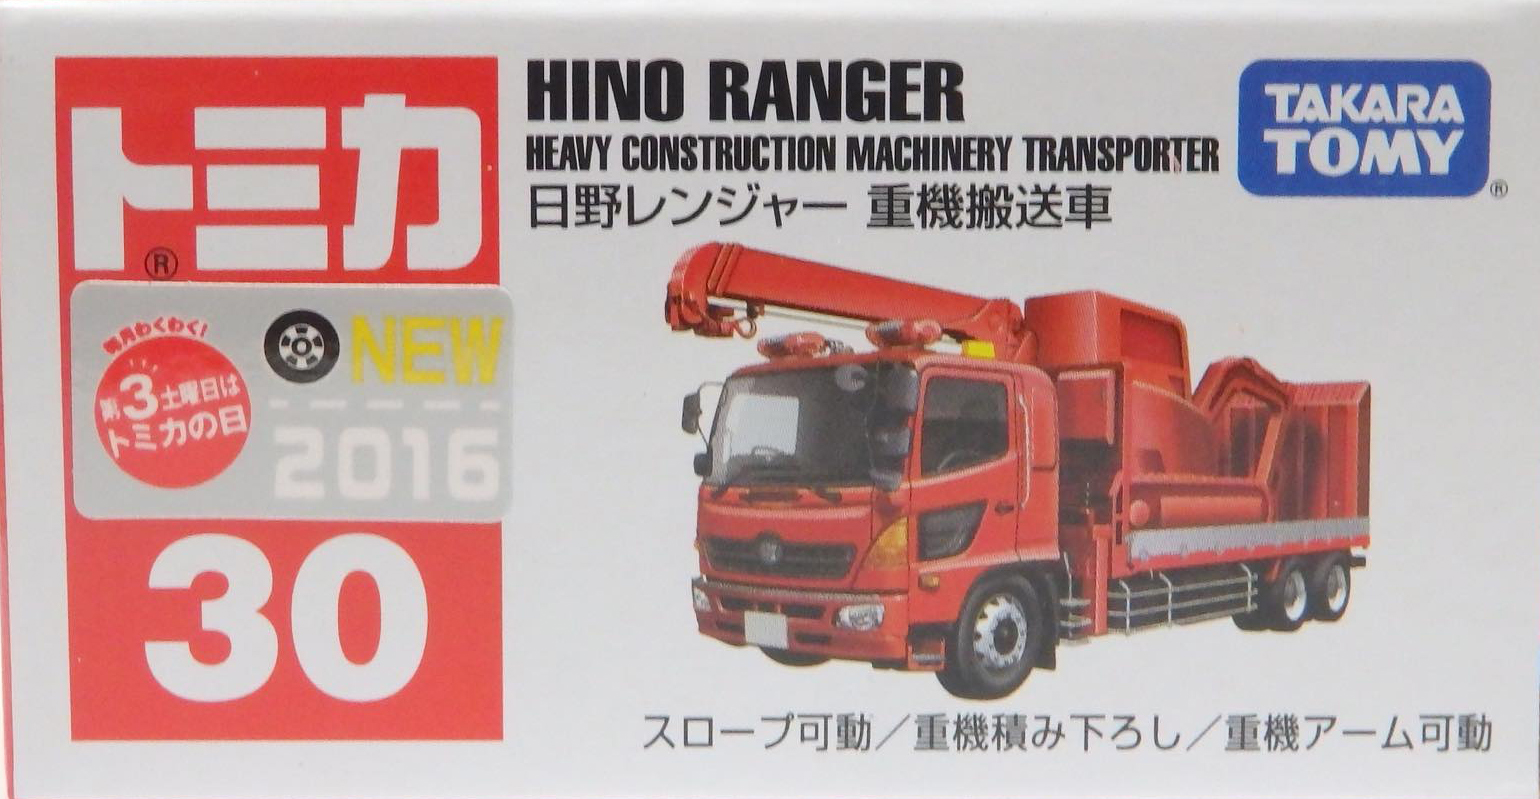 No 30 Hino Ranger Heavy Construction Machinery Transporter Tomica Wiki Fandom